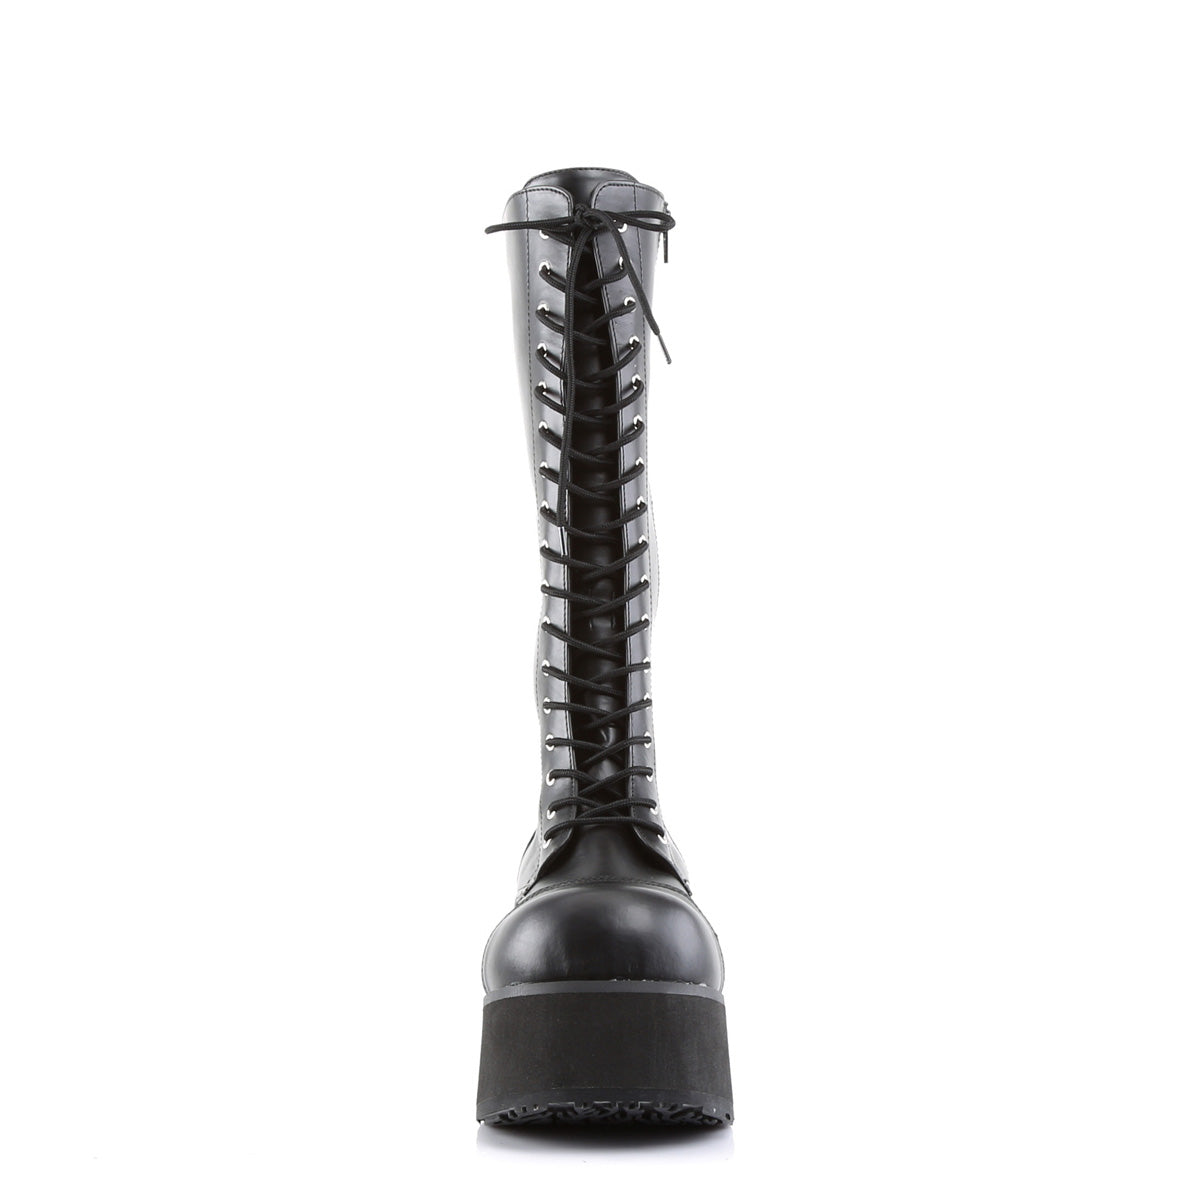 TRASHVILLE-502 Black Vegan Leather Knee Boot Demonia